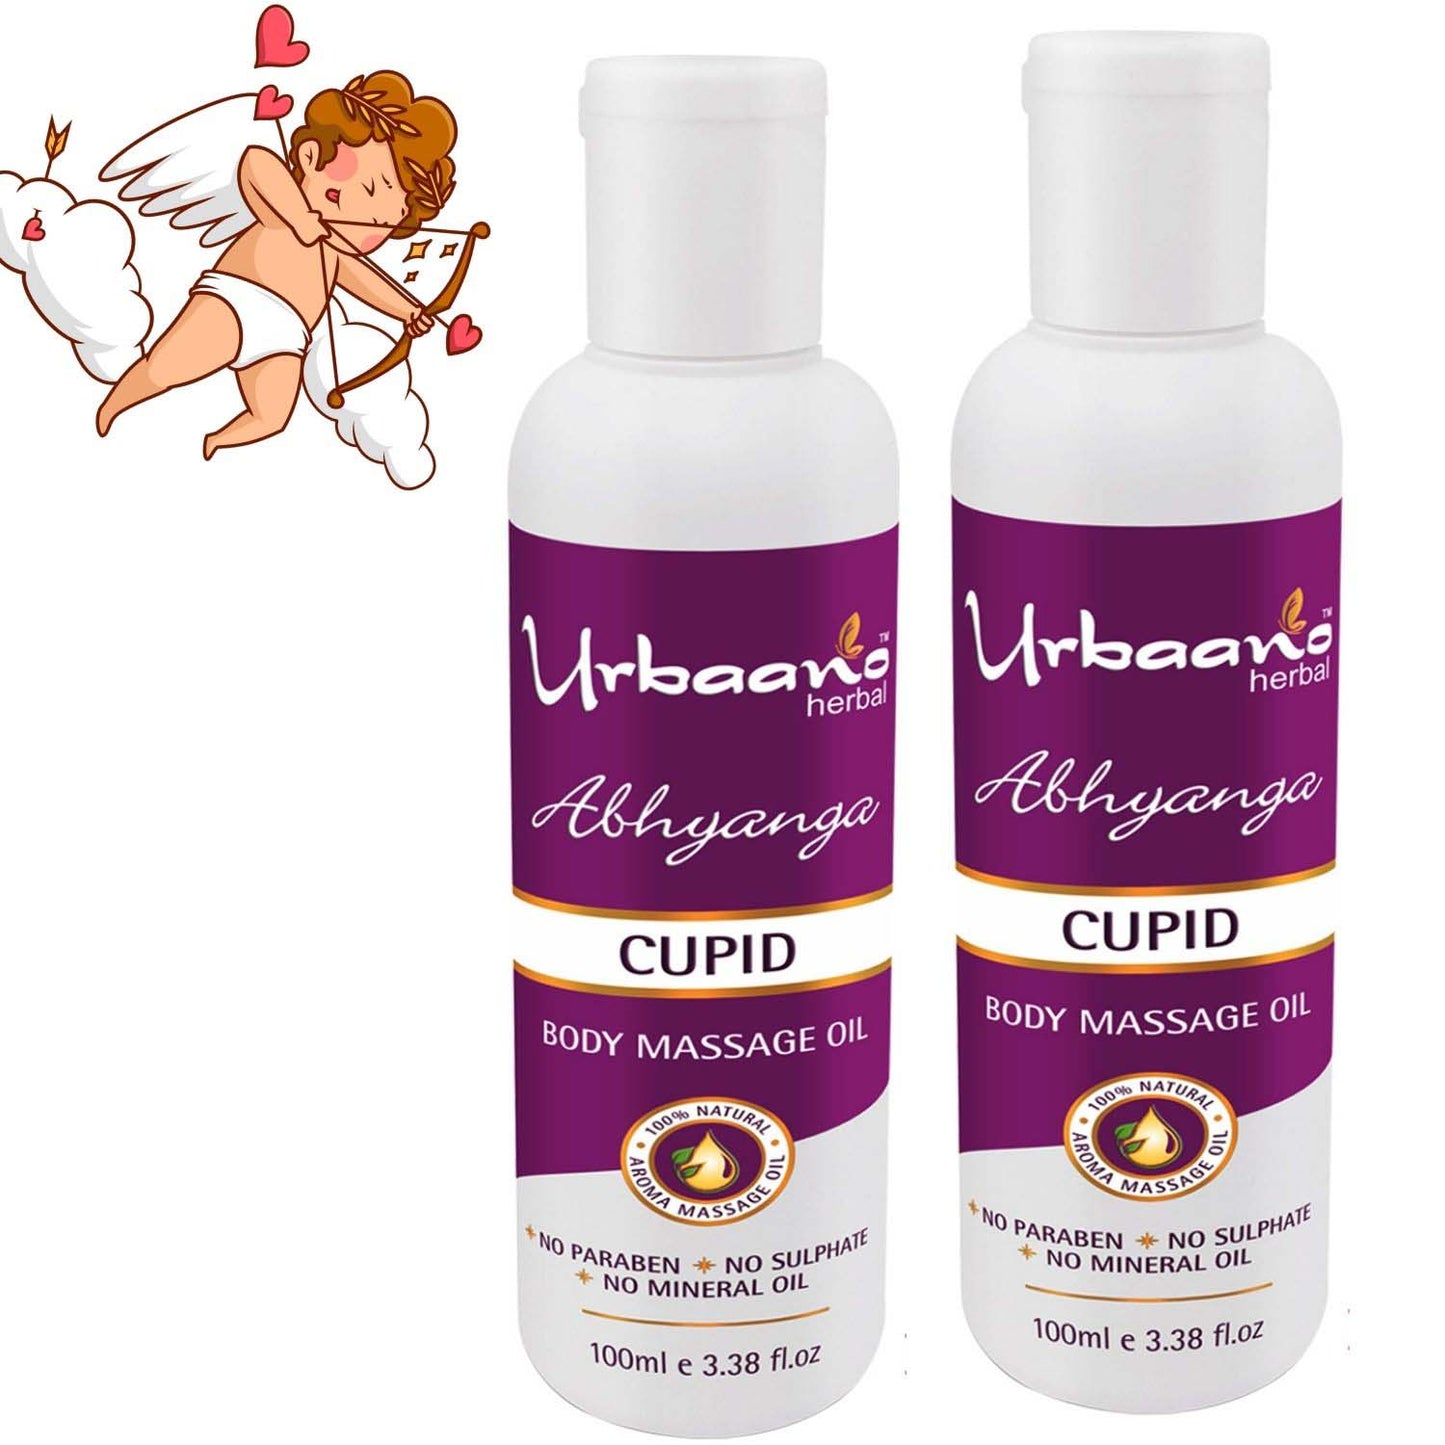 urbaano herbal abhyanga cupid body massage oil for romance, stress relief, nourish skin 